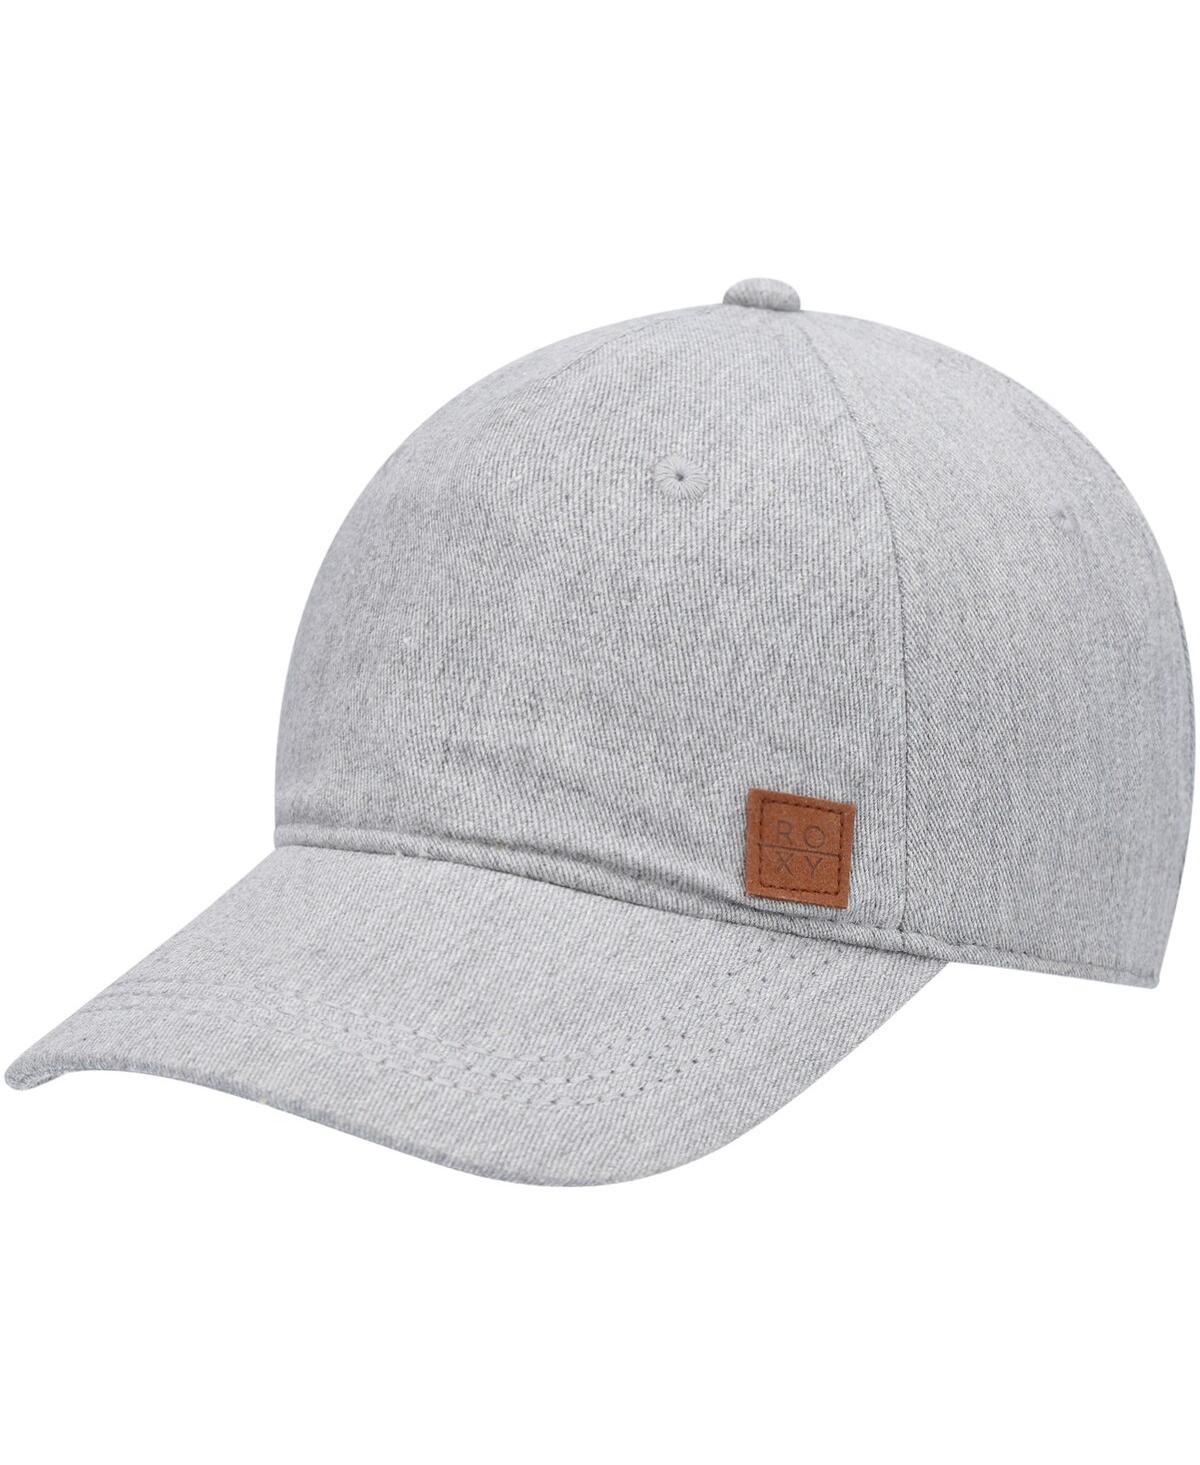 Shop Roxy Women's  Heathered Gray Extra Innings Adjustable Hat